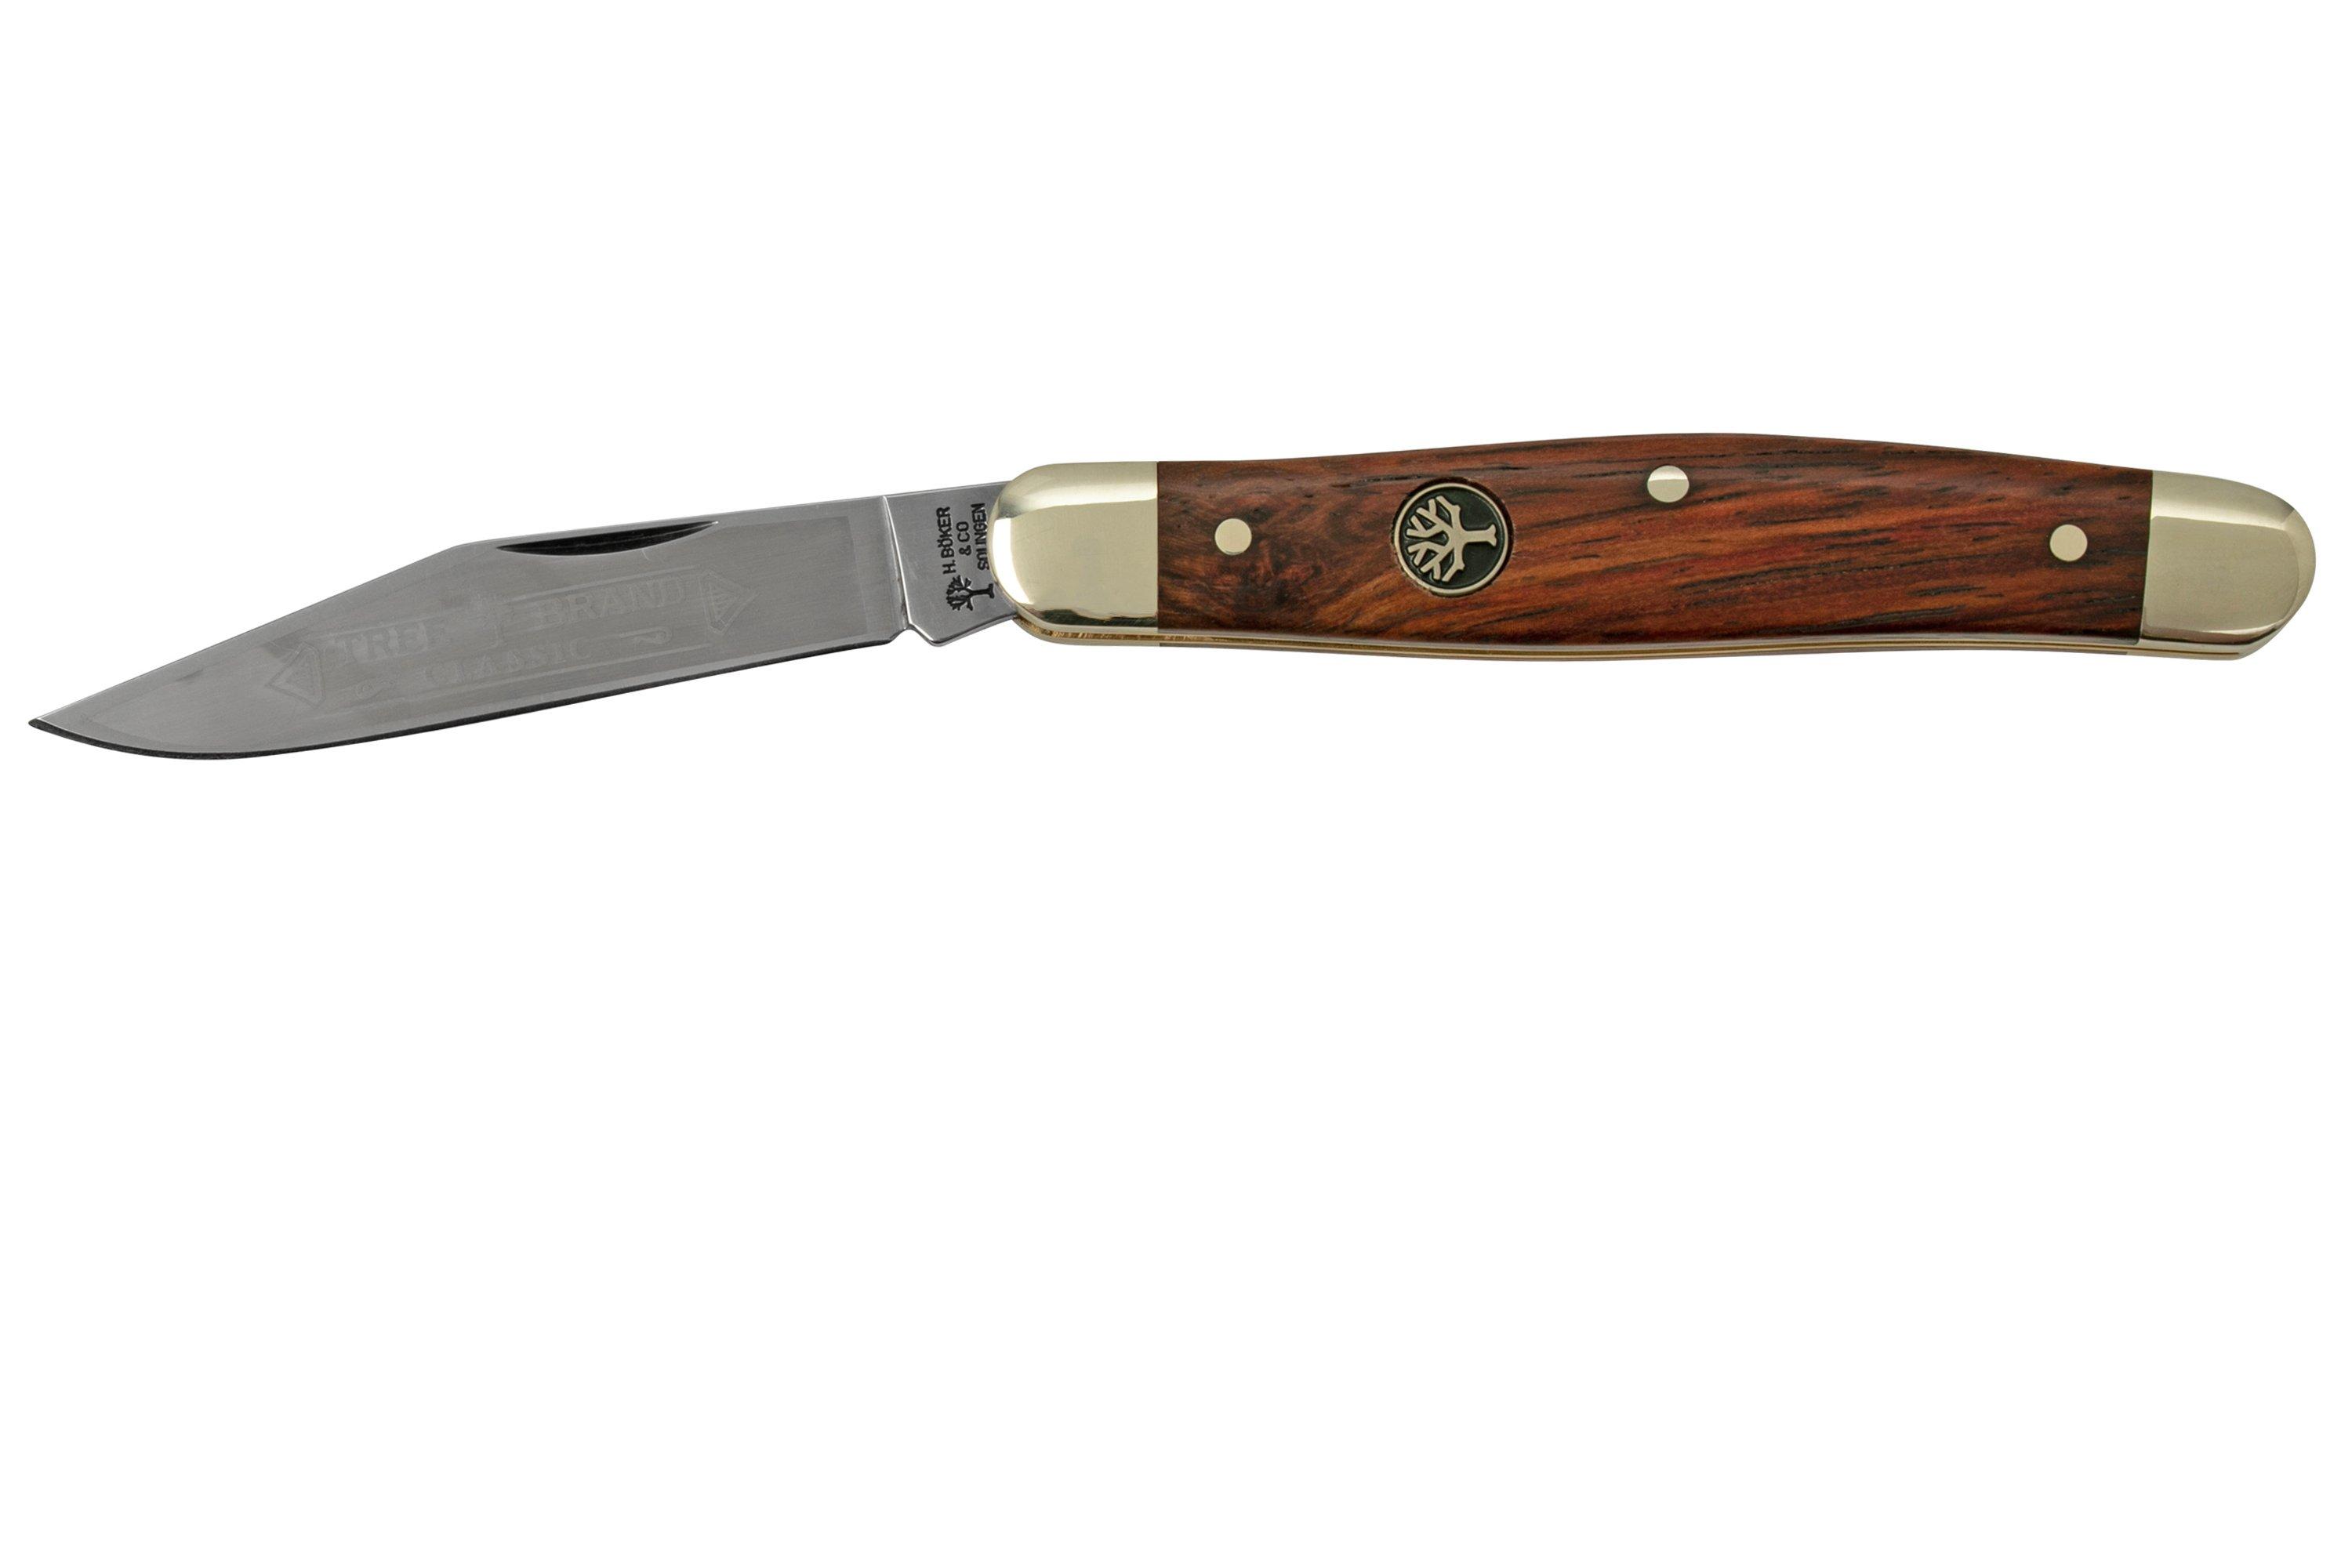 Böker Stockman Rosewood 117162 pocket knife | Advantageously shopping ...